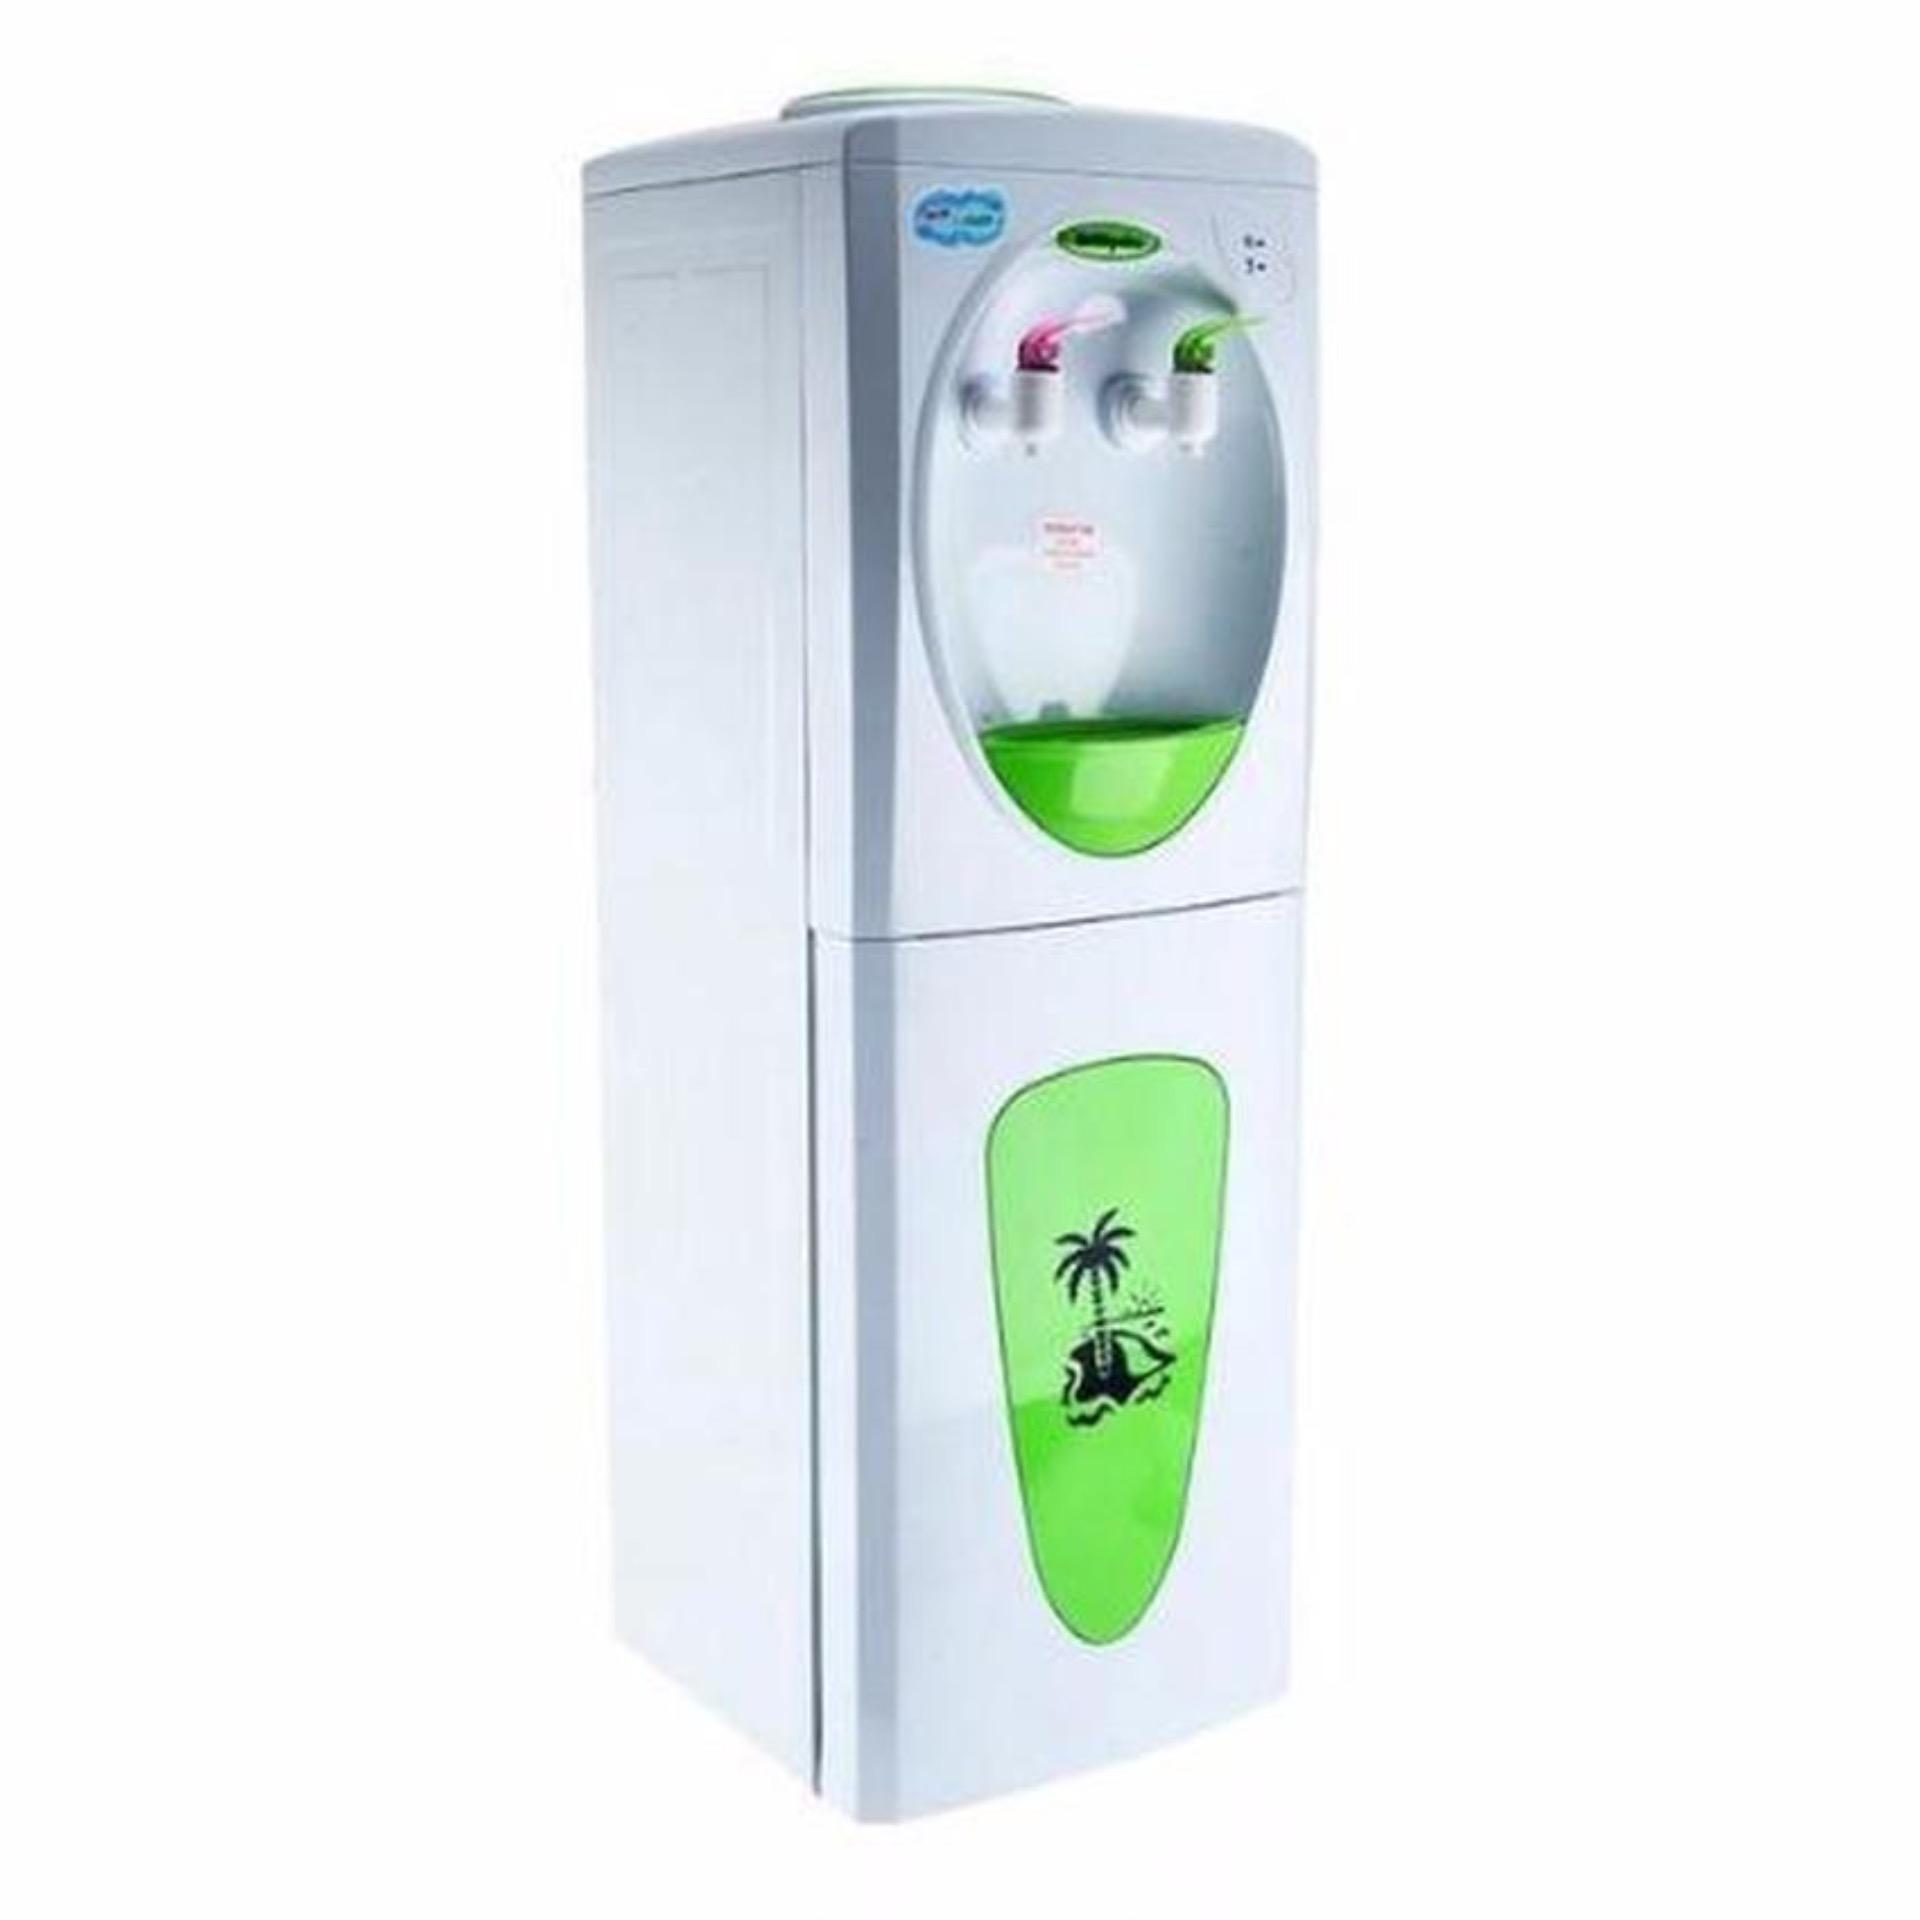  Miyako WD-389 HC Dispenser Air - Putih/Hijau 